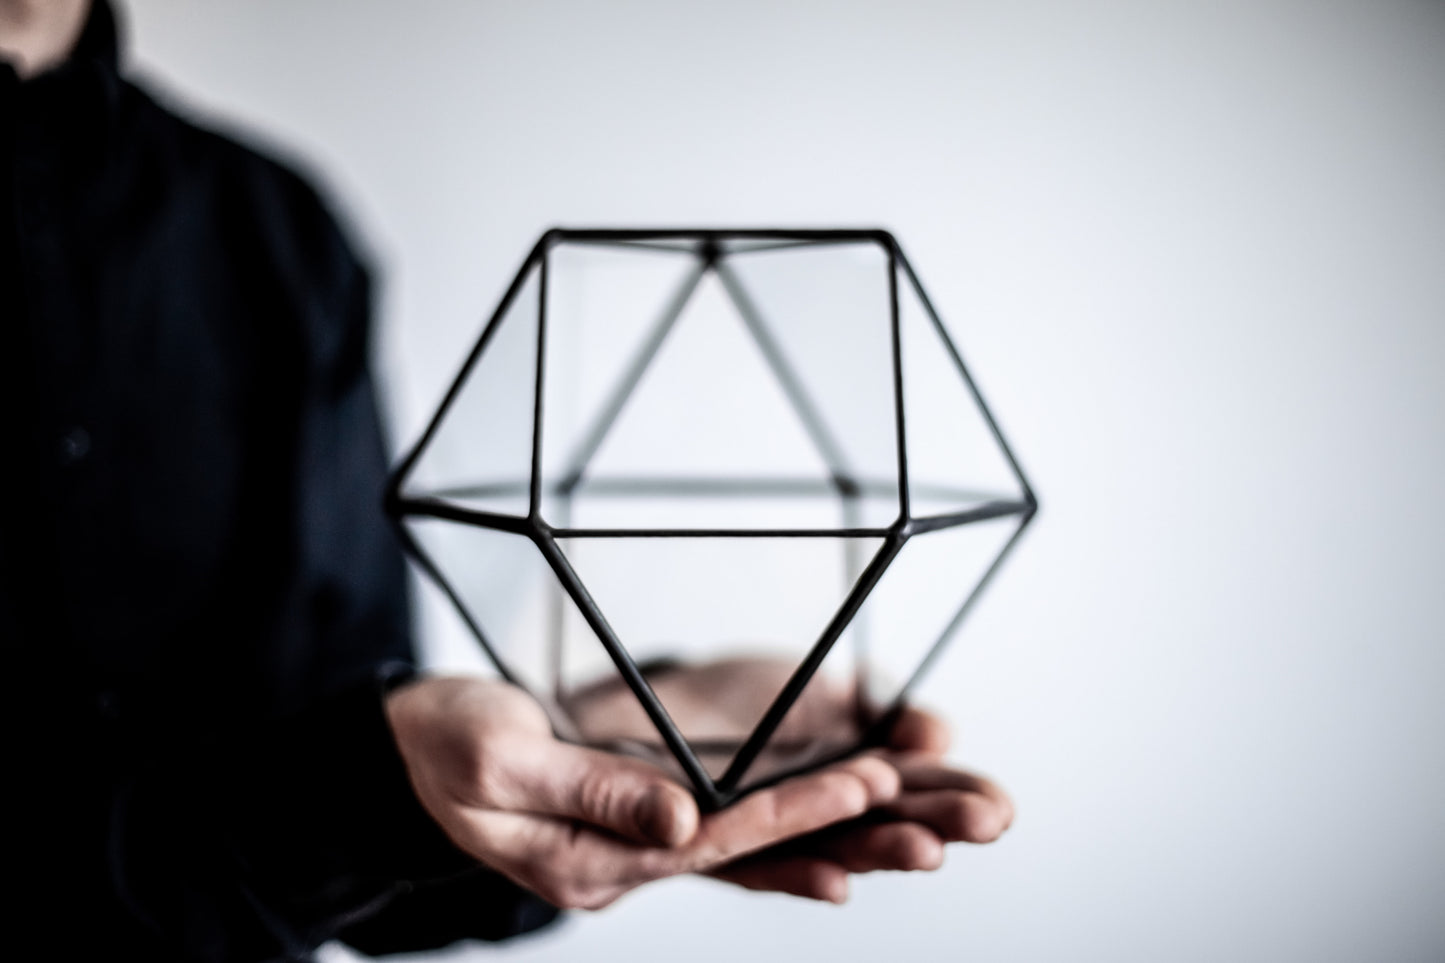 Cuboctahedron Stained Glass Geometric Terrarium